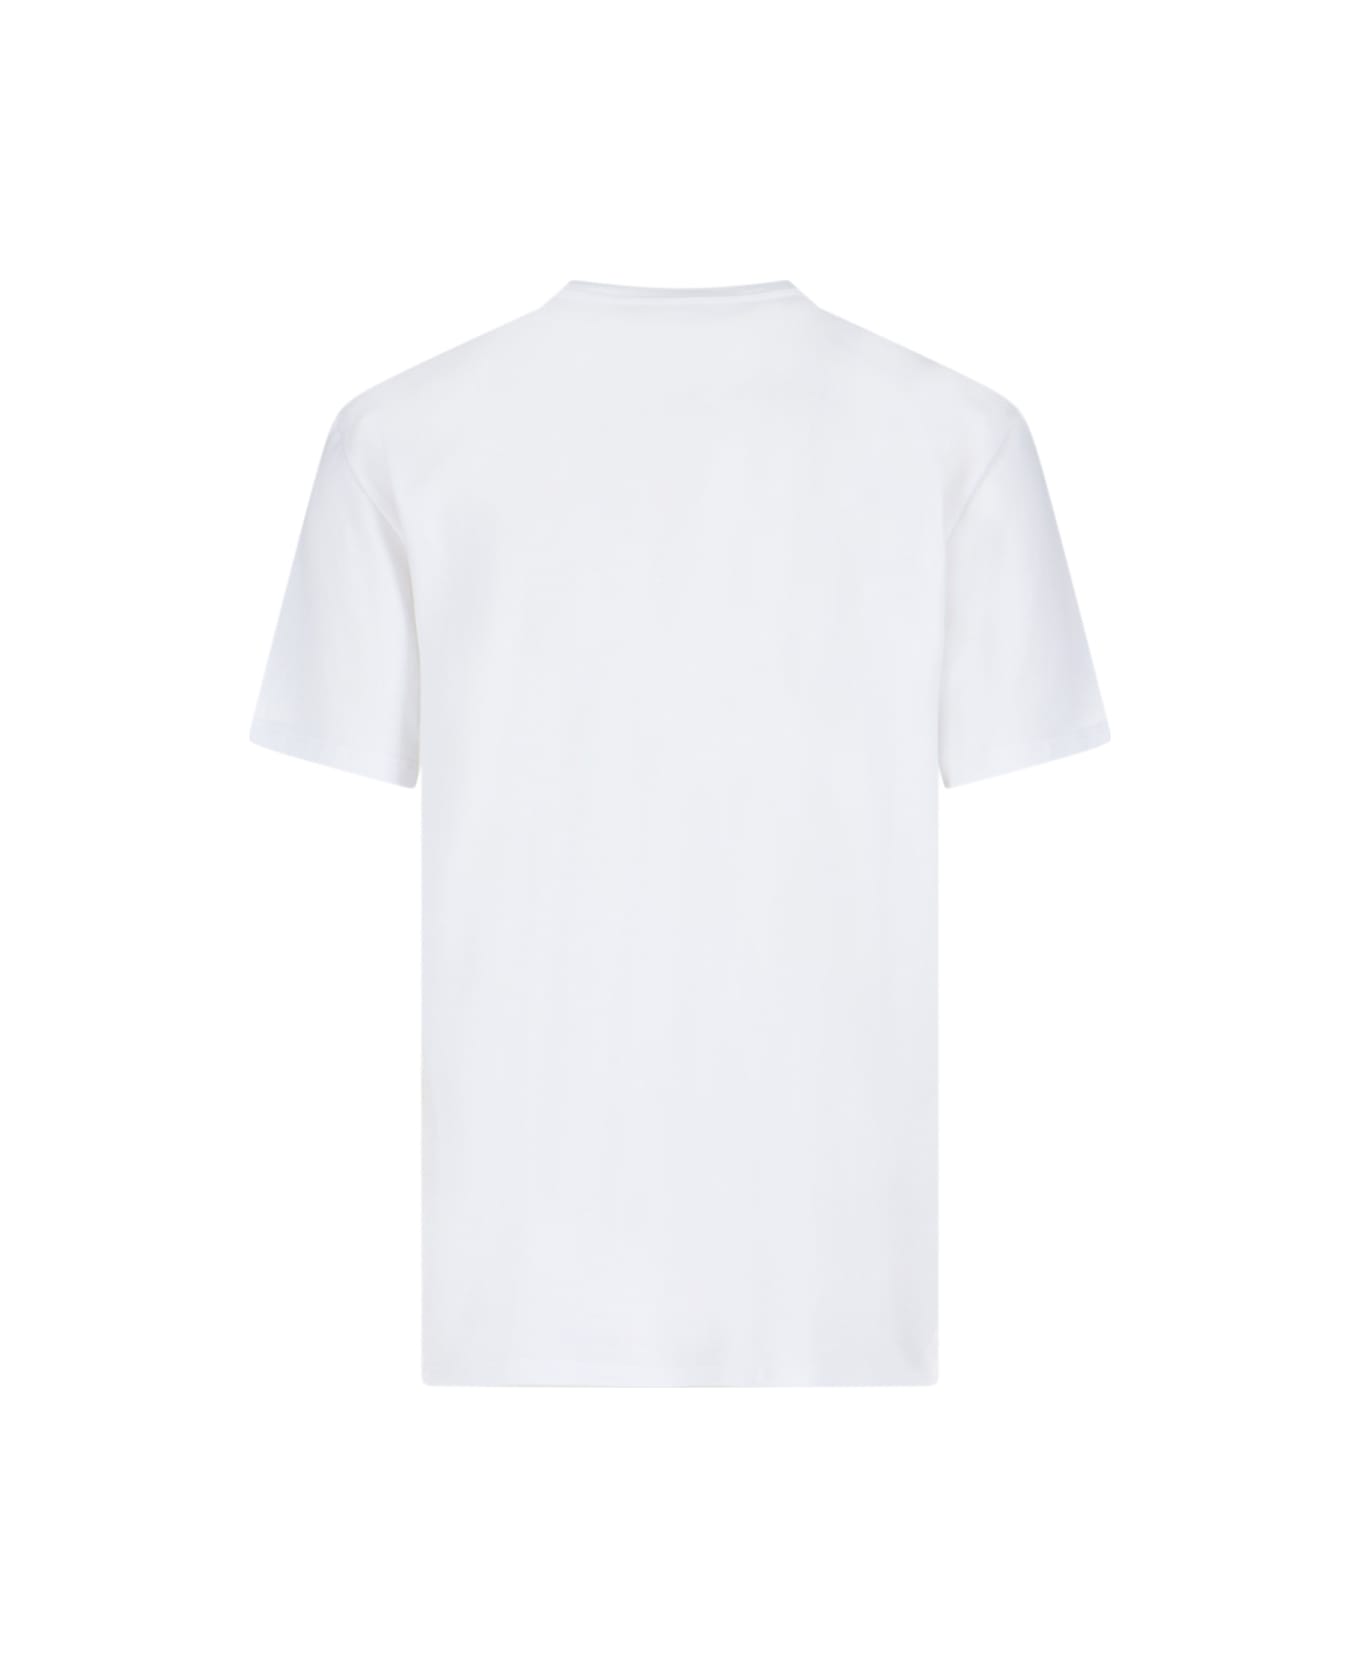 Alexander McQueen 'logo Riflesso' T-shirt - White シャツ